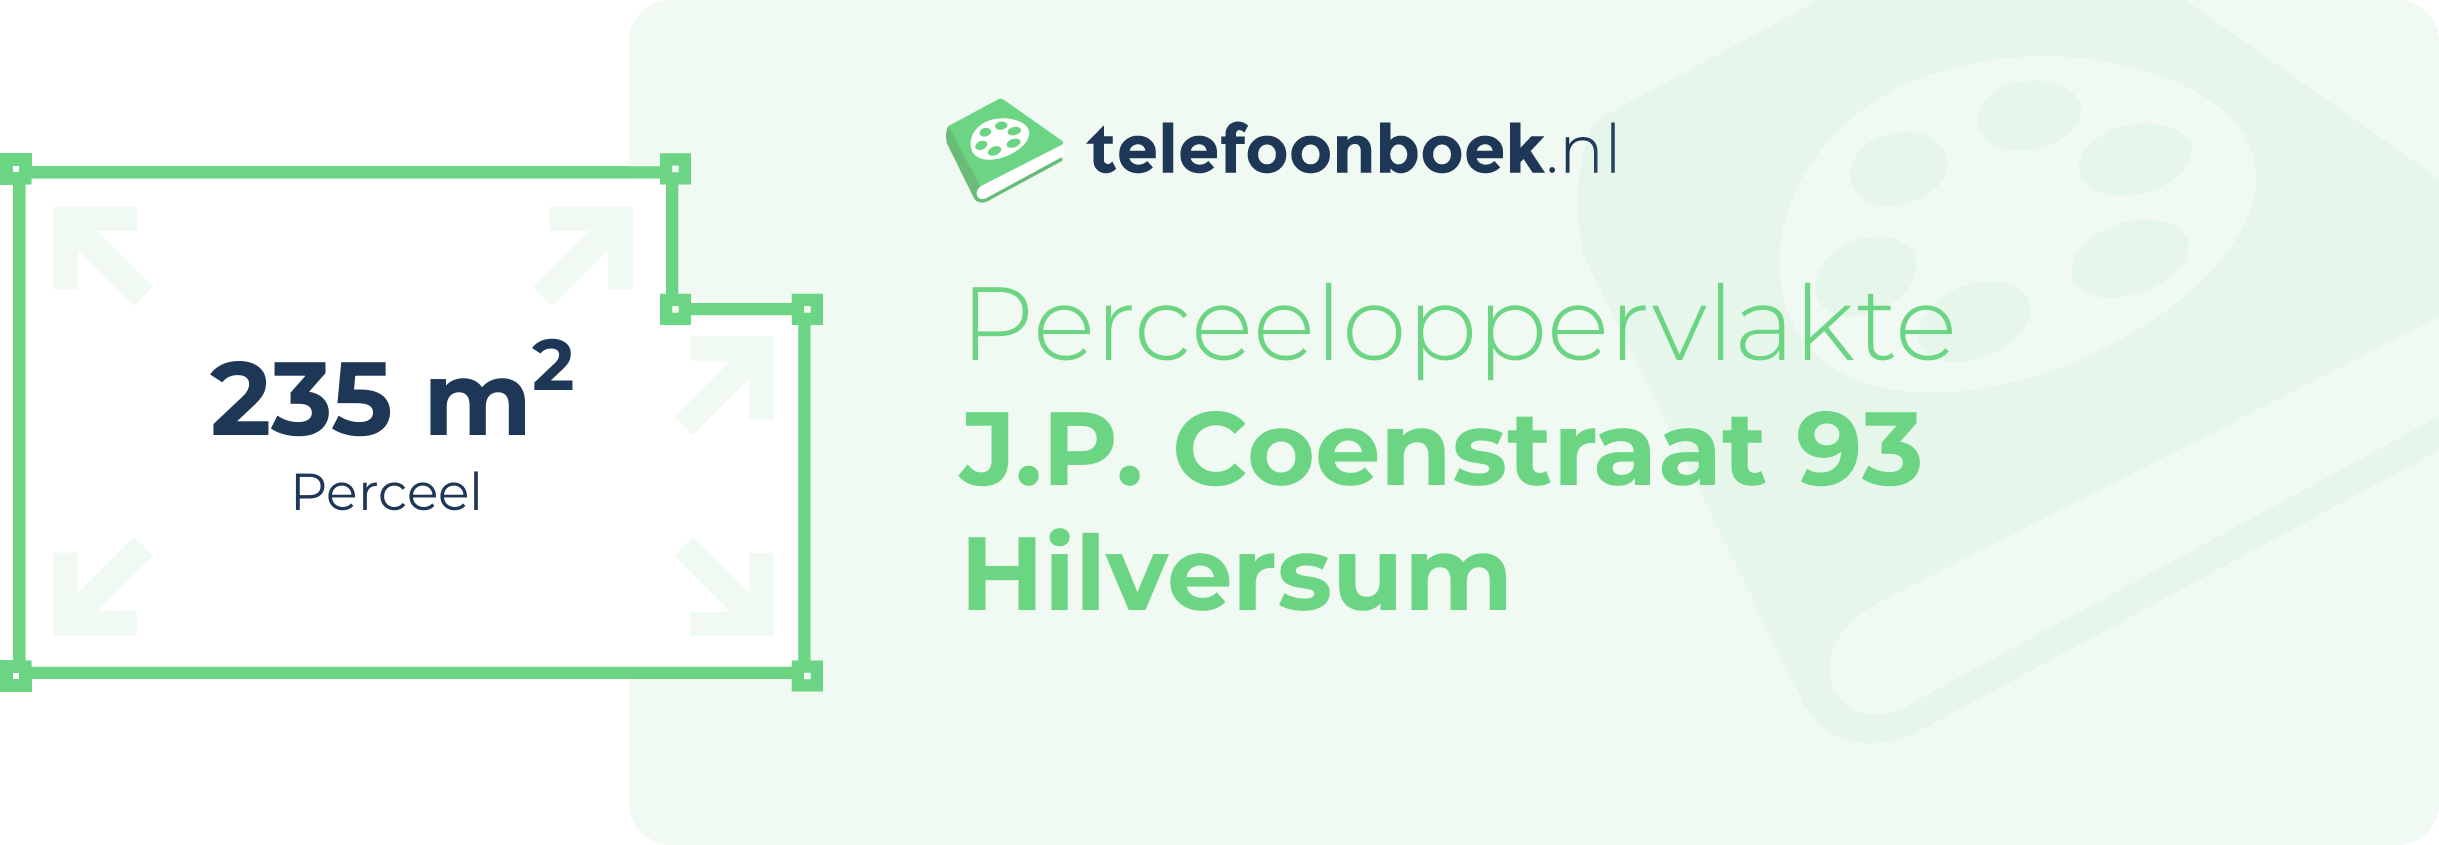 Perceeloppervlakte J.P. Coenstraat 93 Hilversum